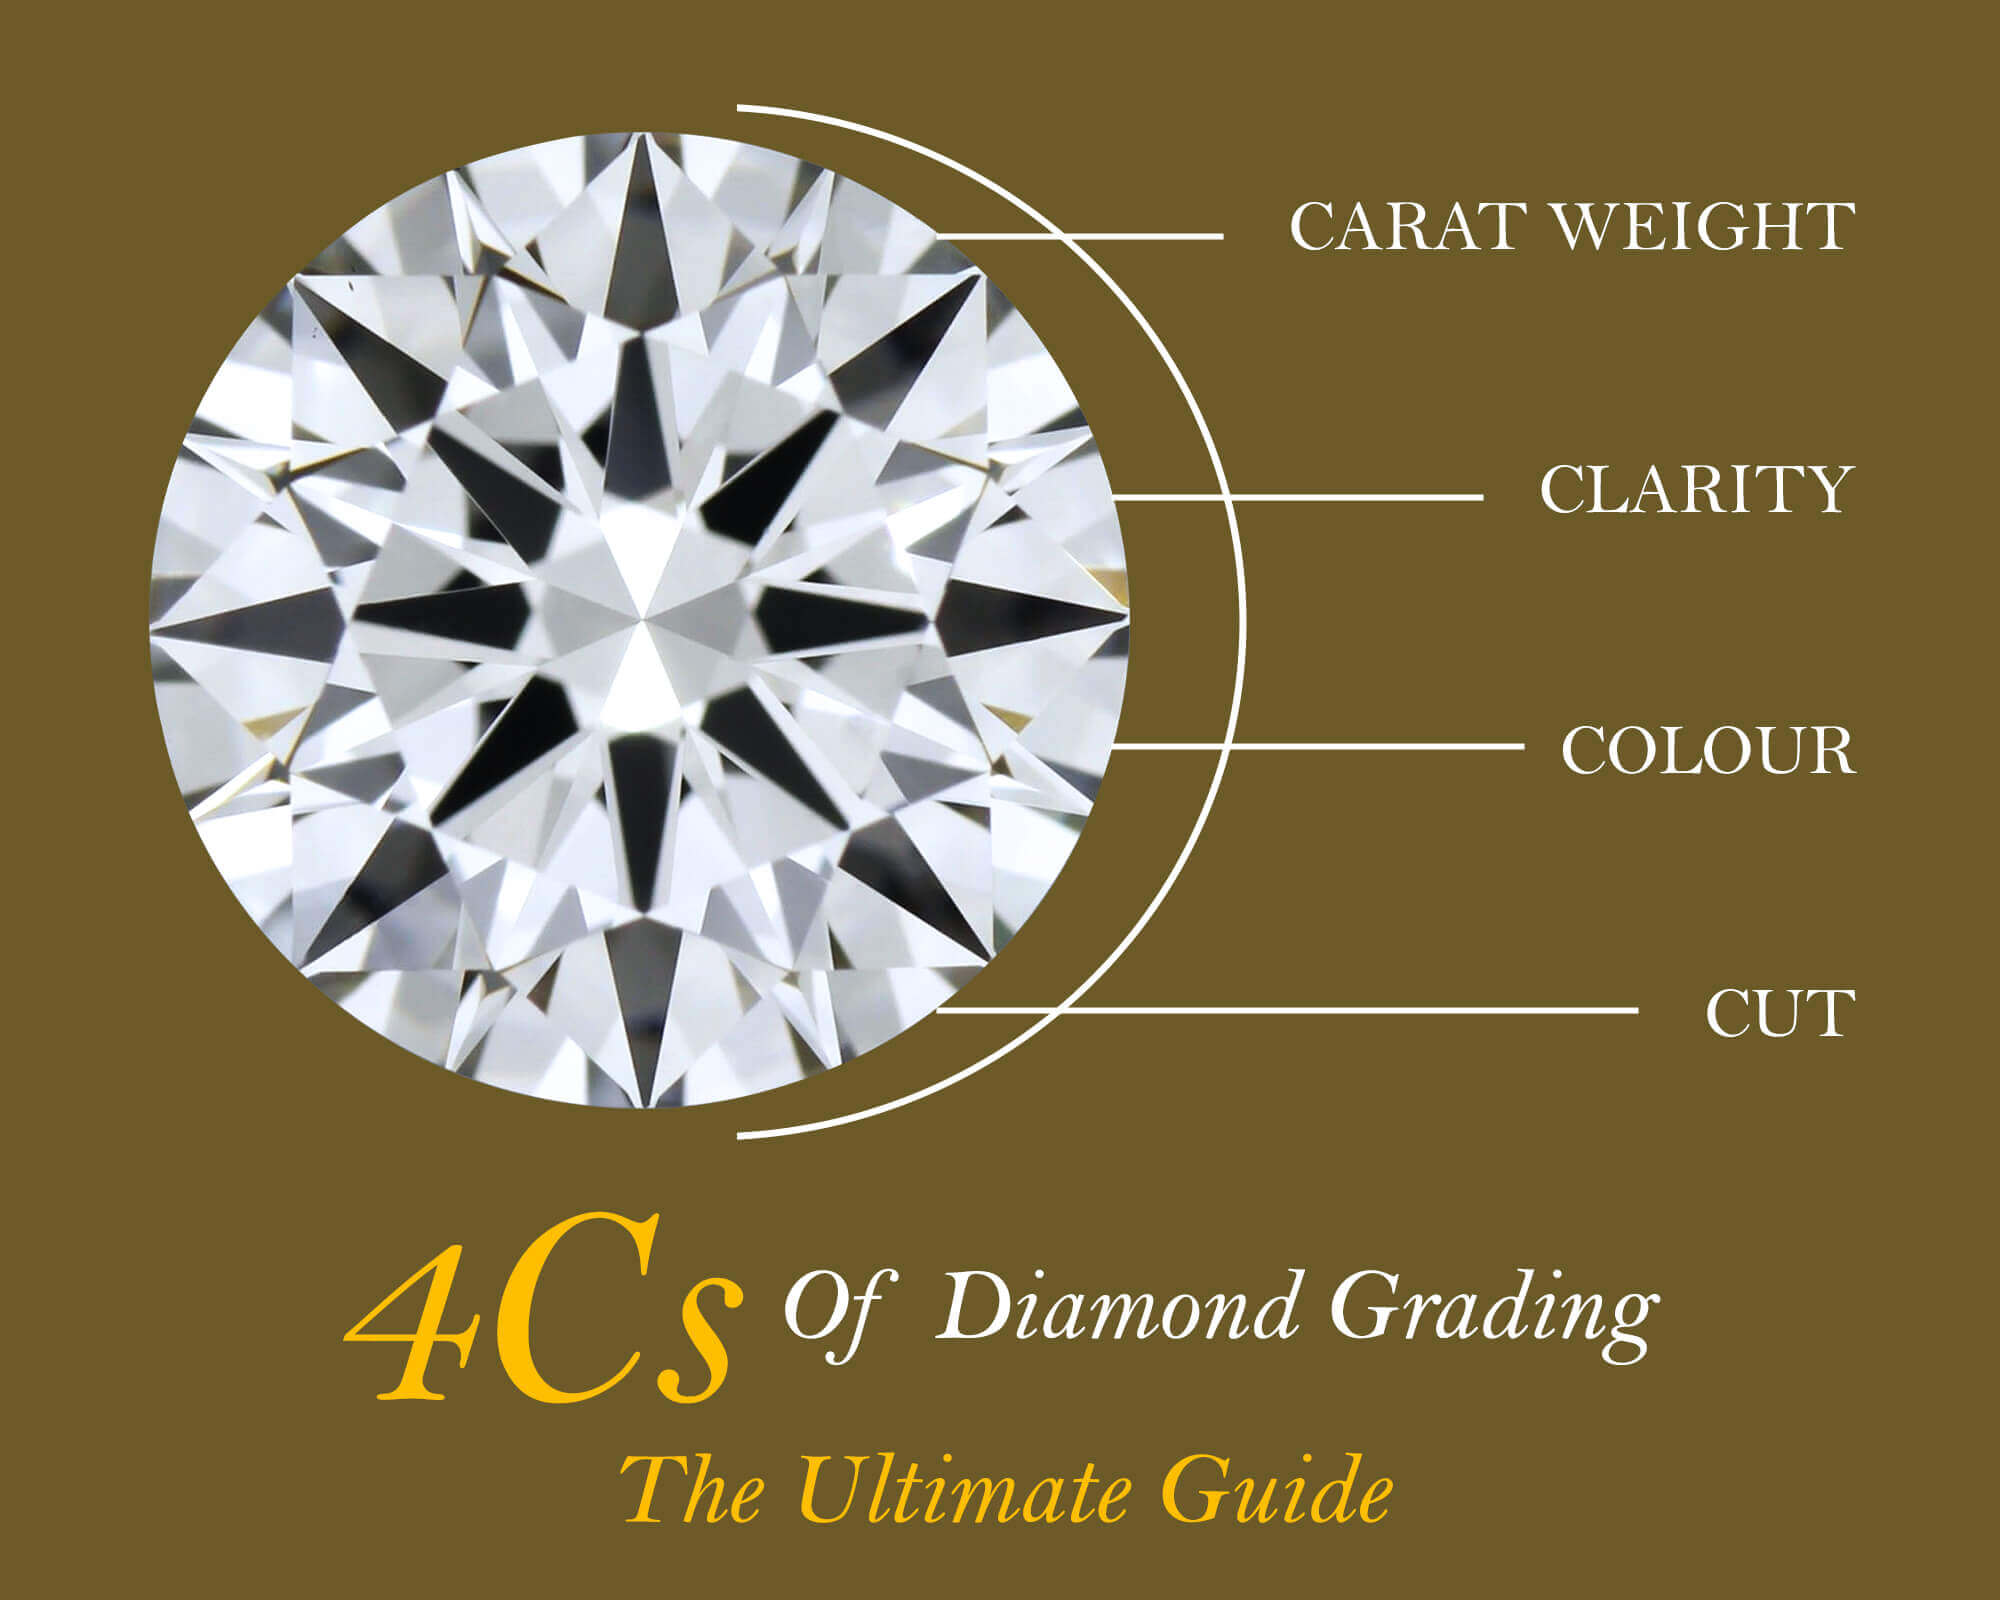 The basic 4Cs of diamond